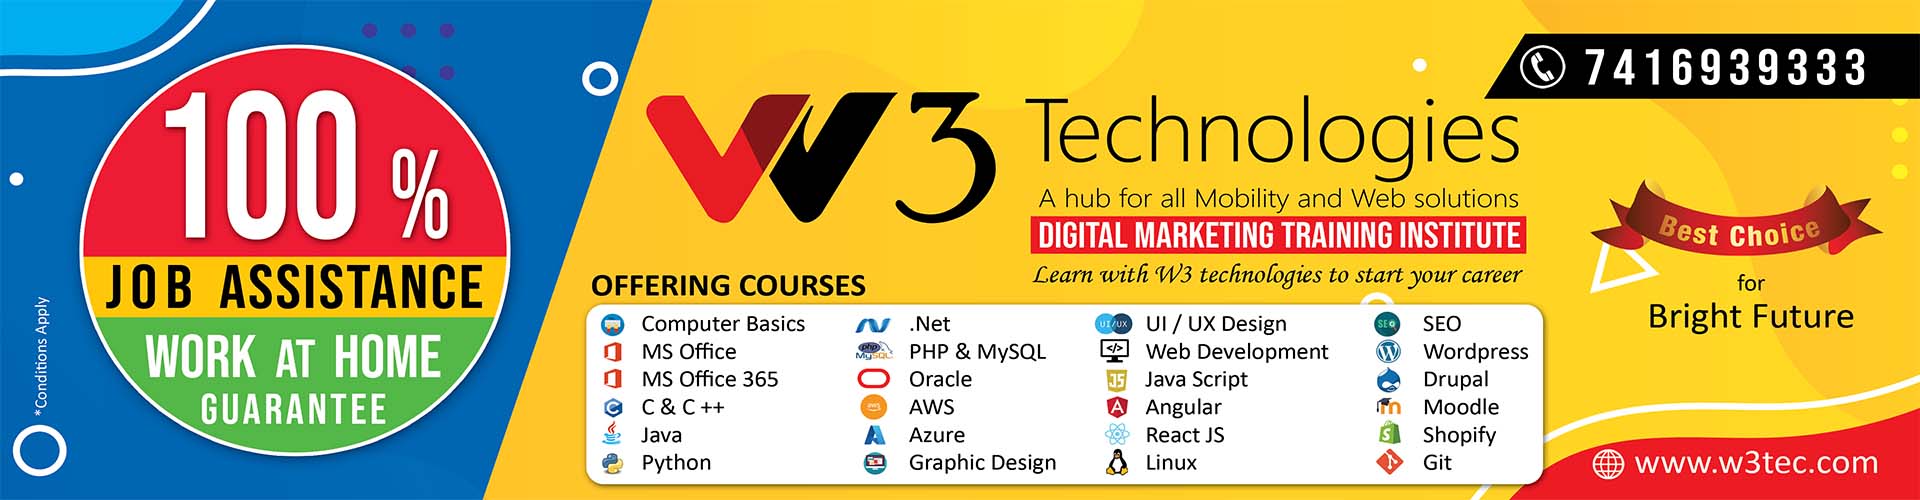 W3 Technologies Web Banner